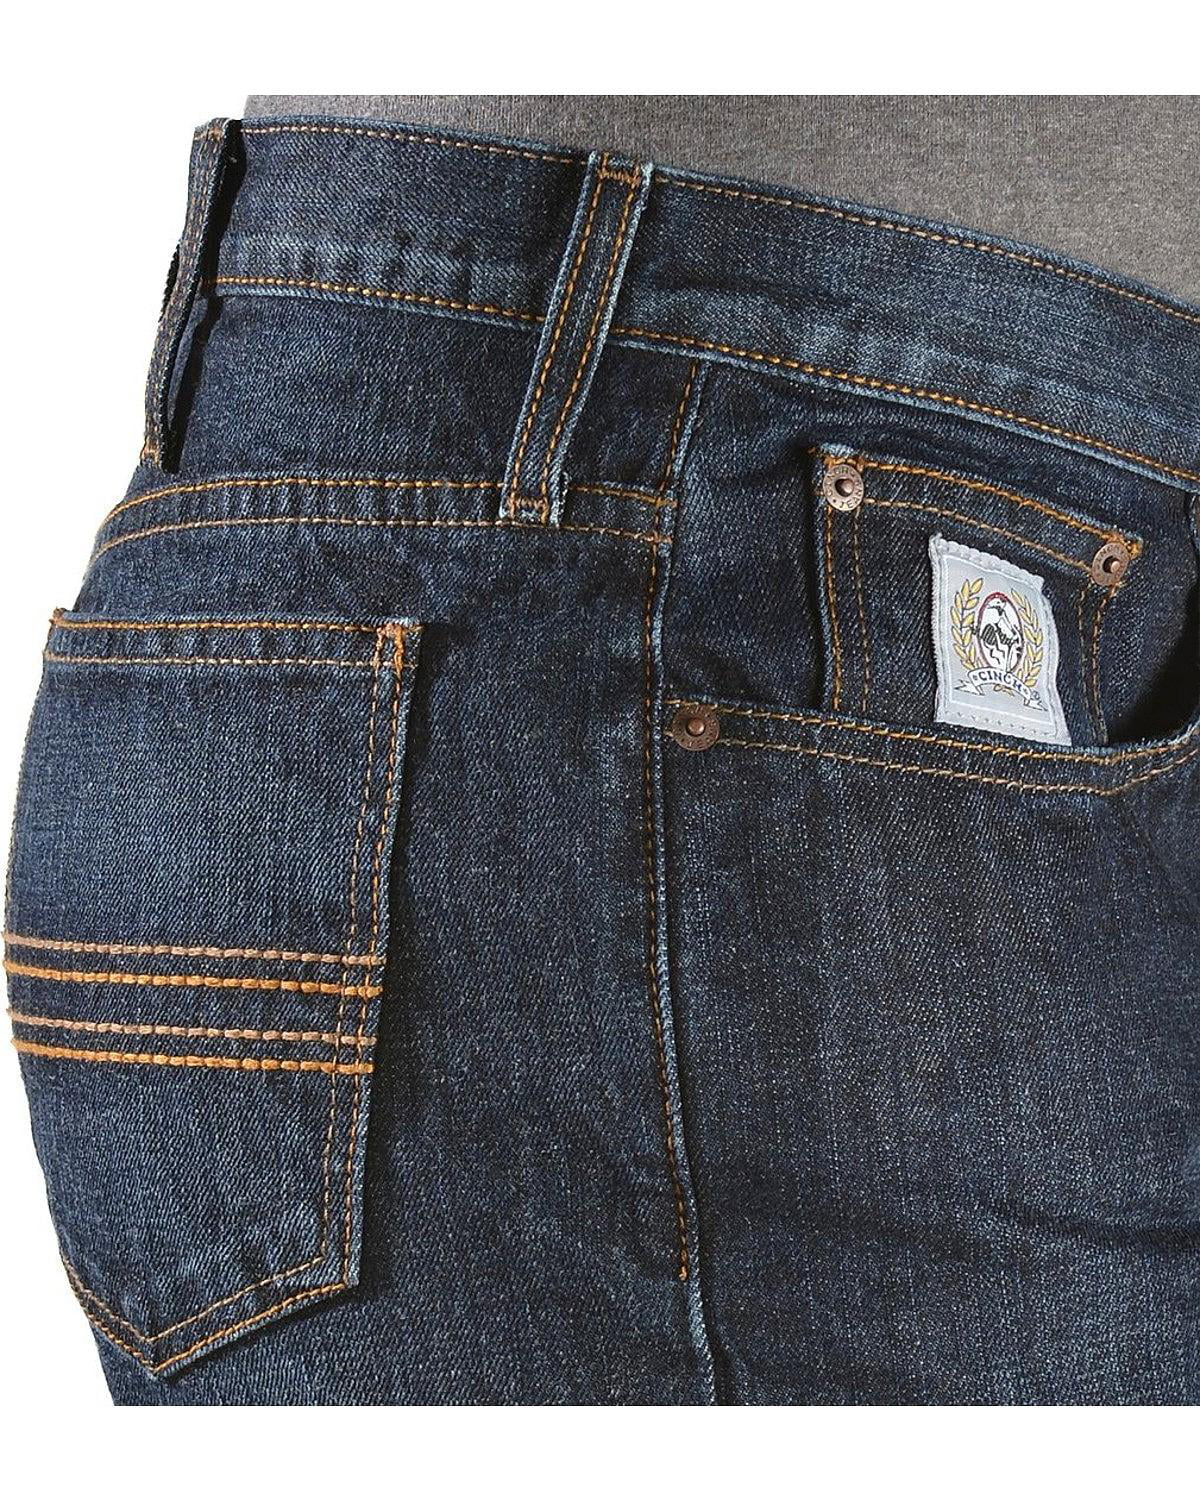 cinch jeans silver label